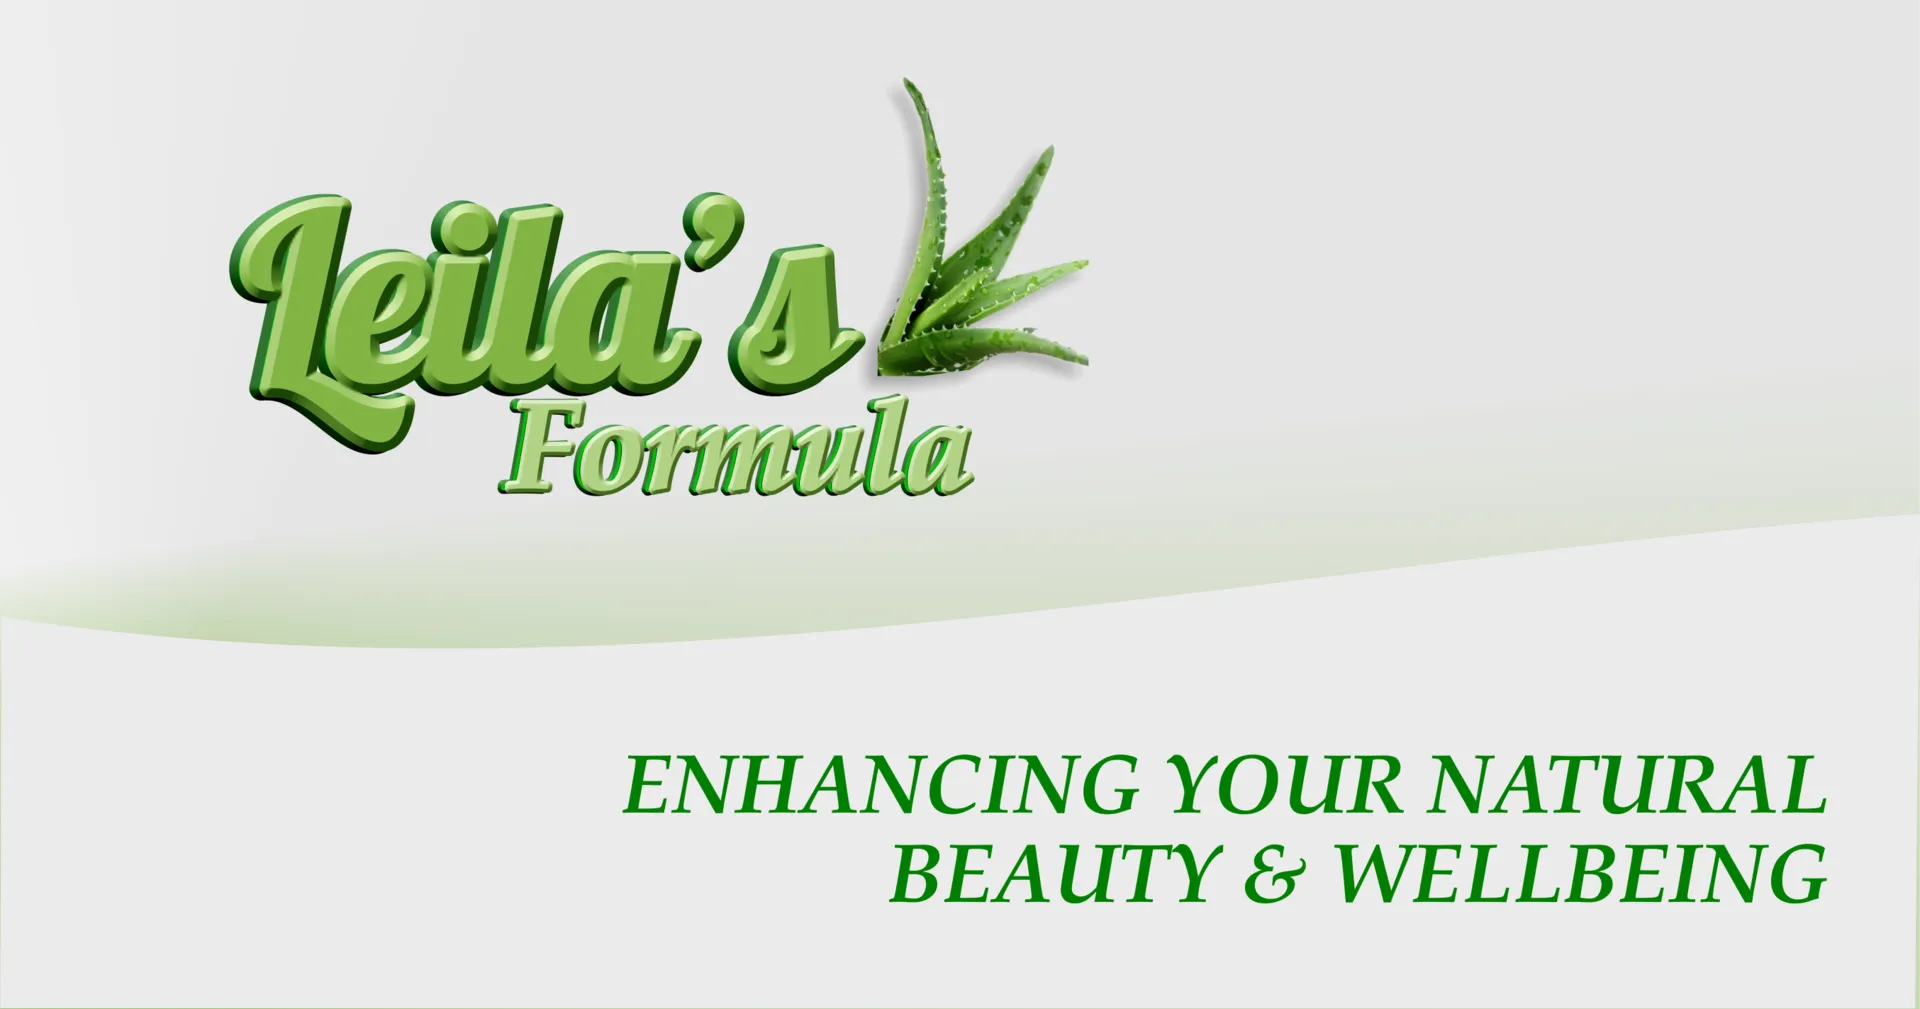 Leila's Formula leilasformula.co.za logo